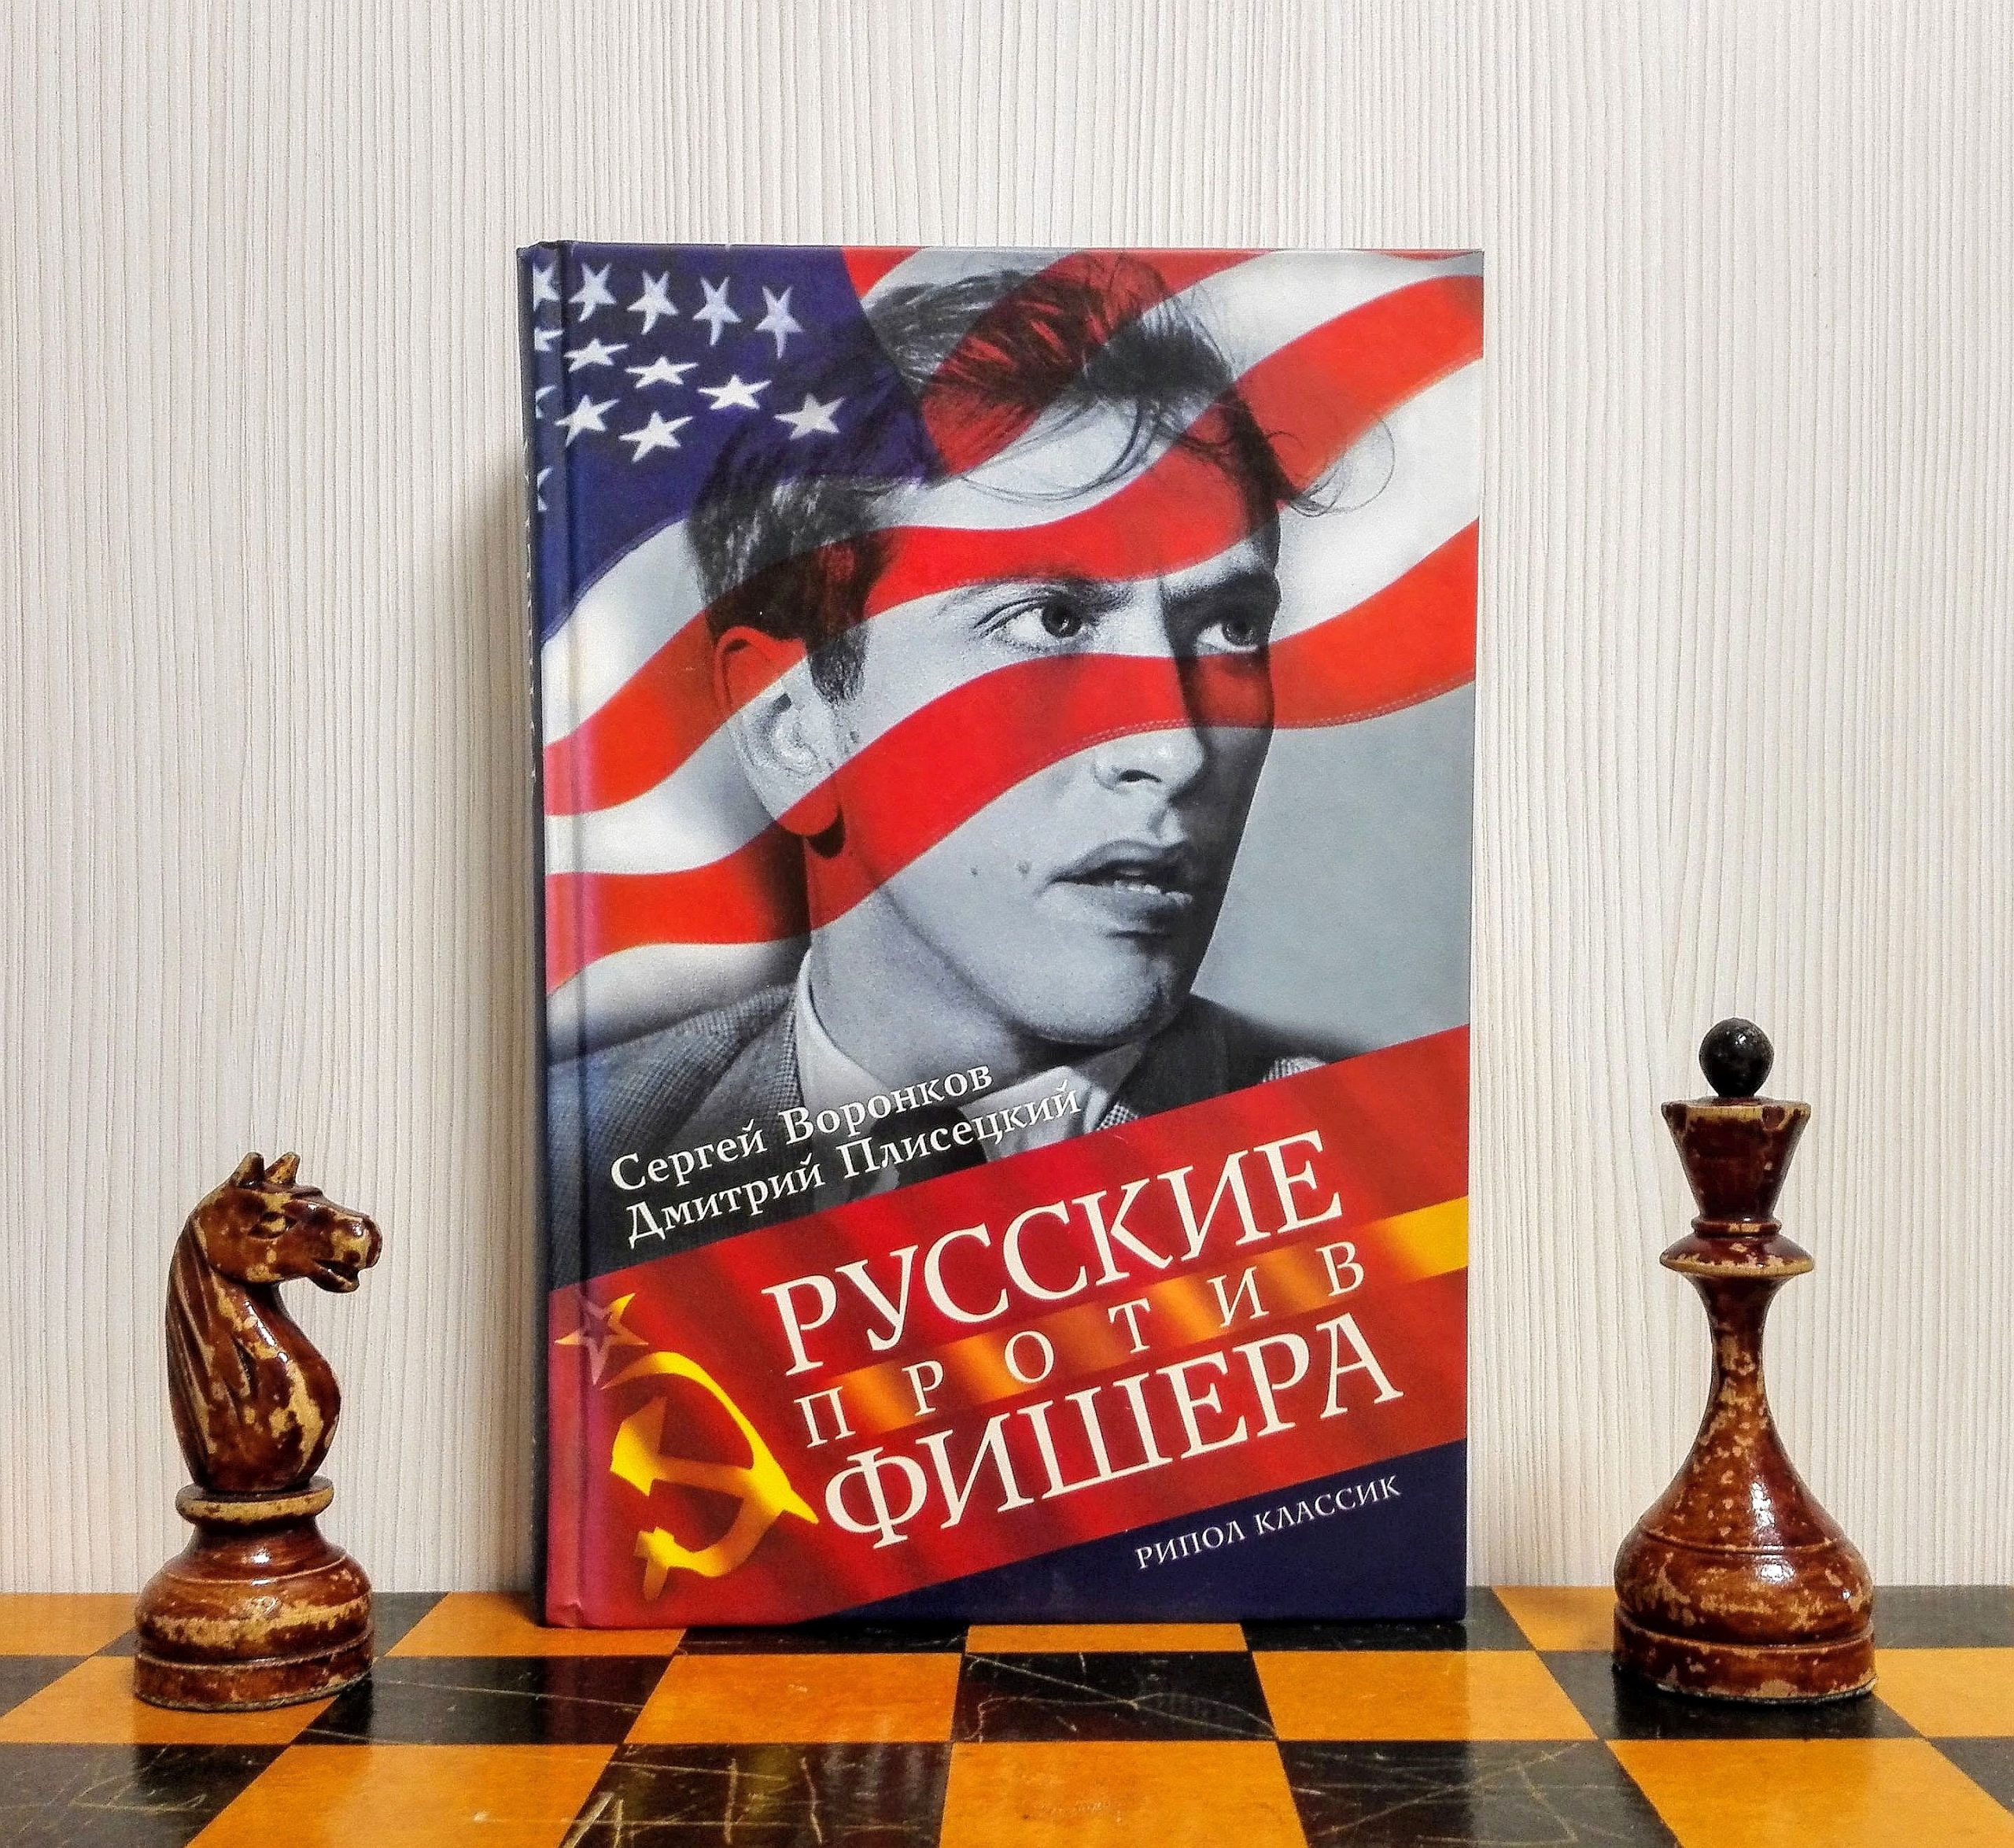 Anatoly Karpov Soviet Chess Book. Vintage Russian chess book